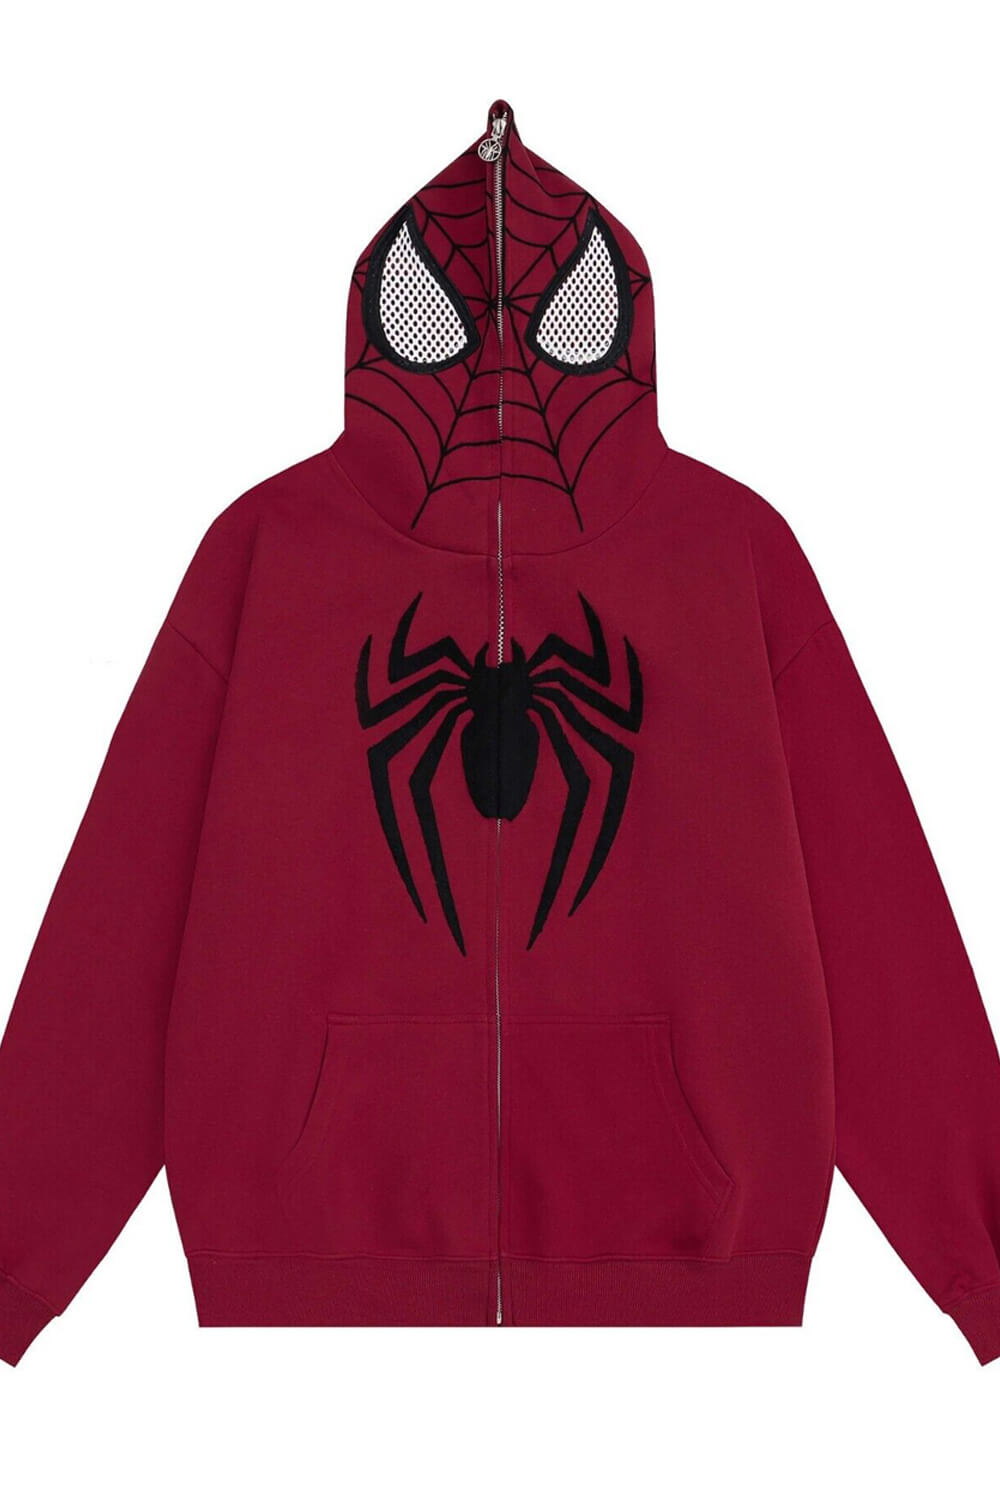 Full Head Mask Zip Up Spider-Man Hoodie Unisex Altcore Geek